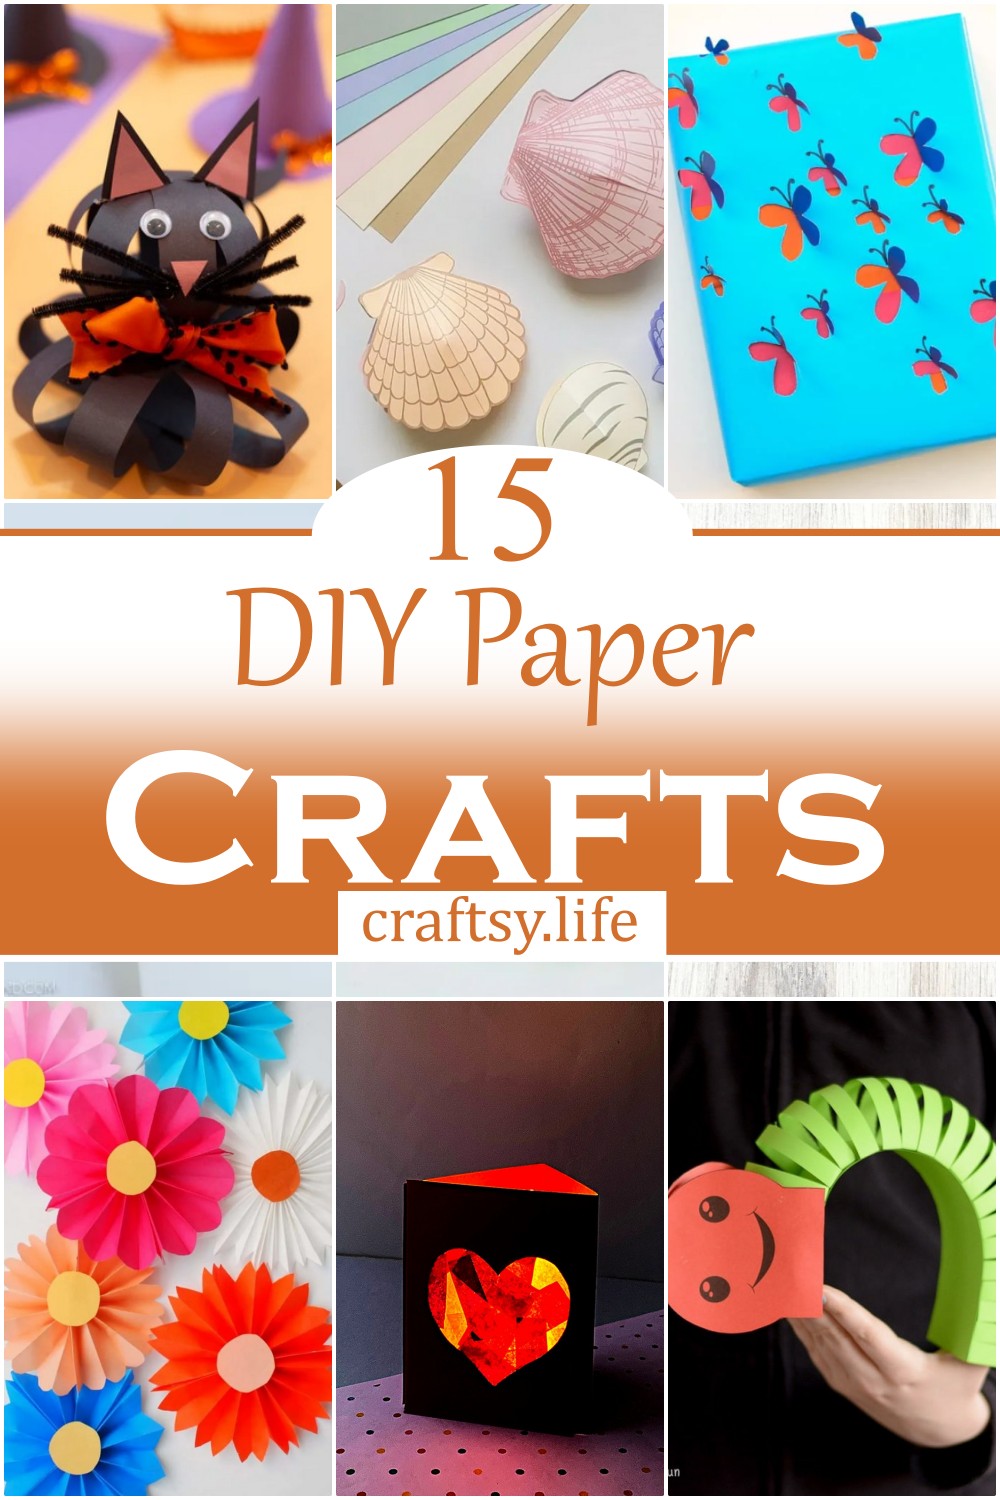 DIY Paper Crafts